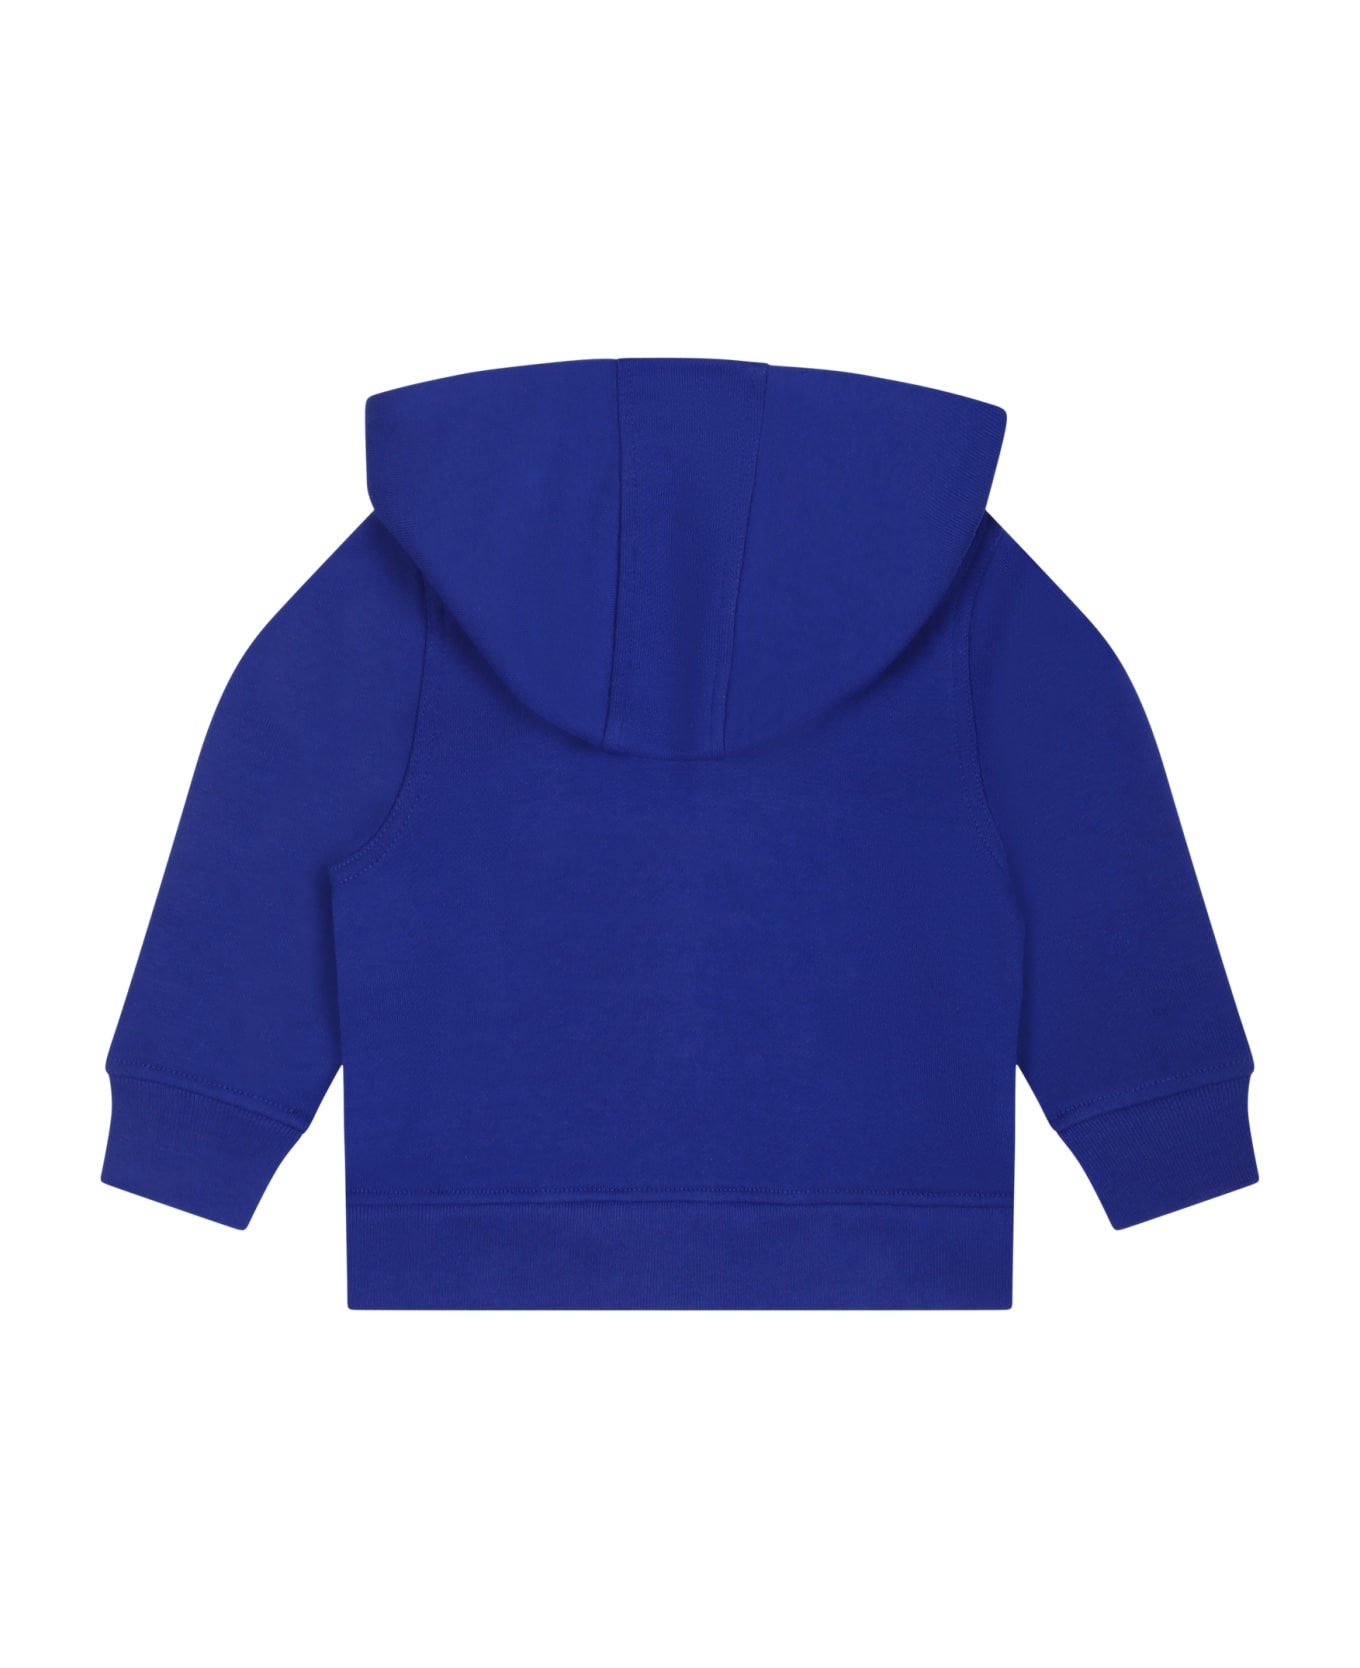 Burberry Sweatshirt For Baby Boy With Logo - Blue